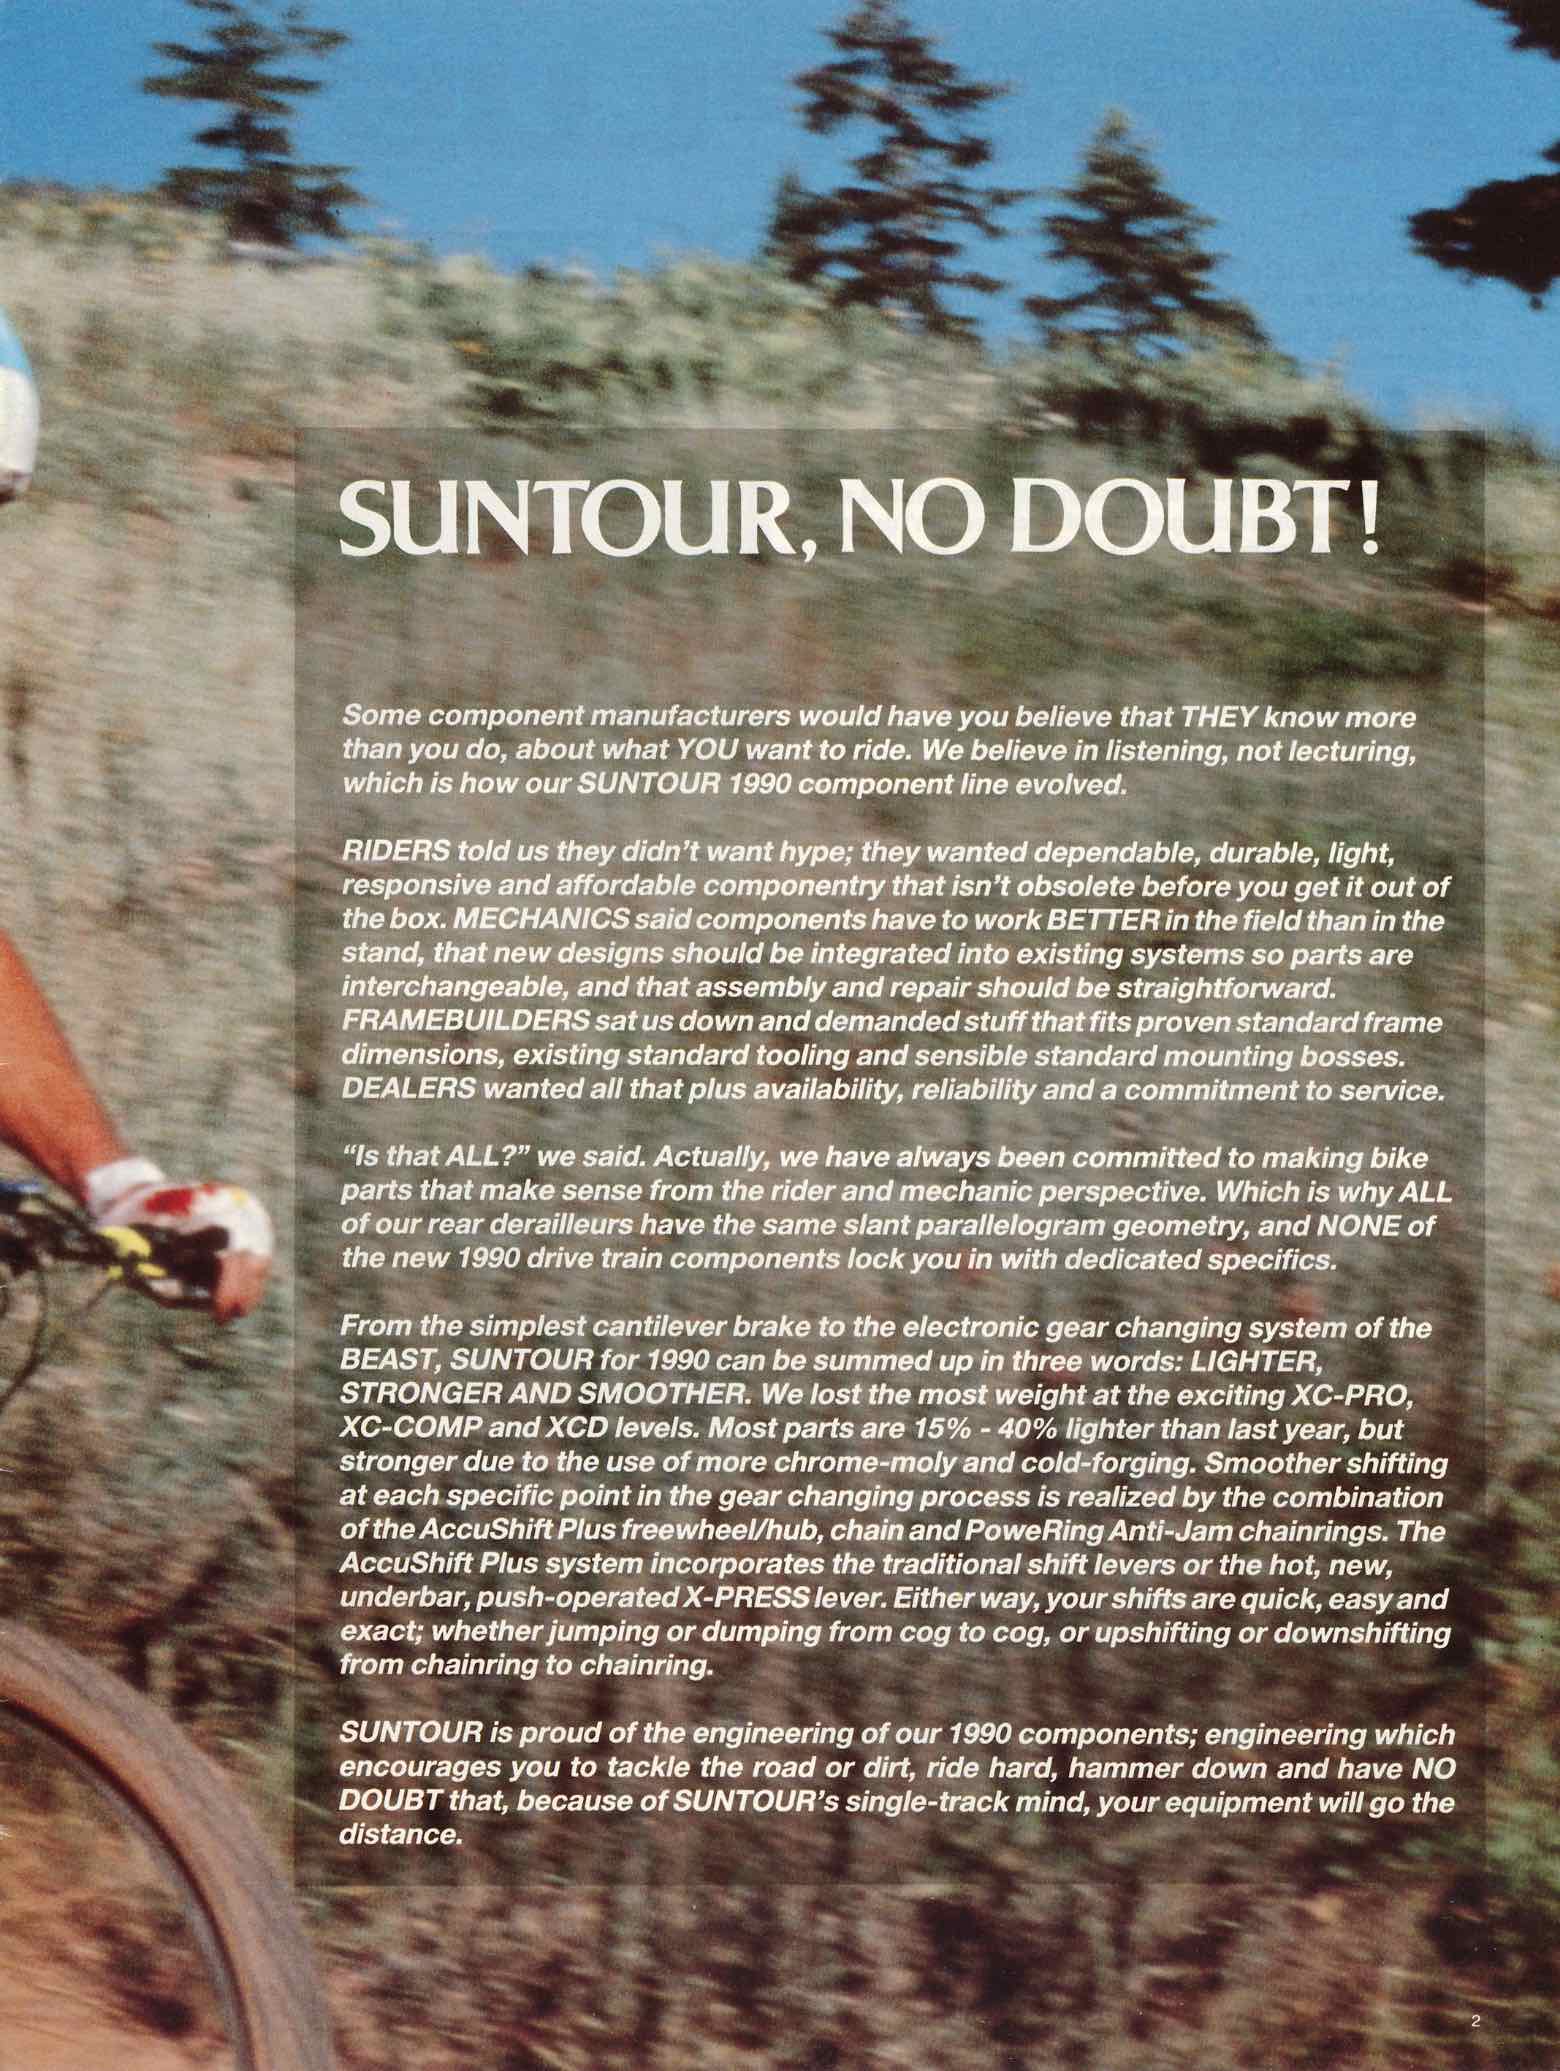 SunTour Bicycle Equipment Catalog 1990 - Page 2 main image